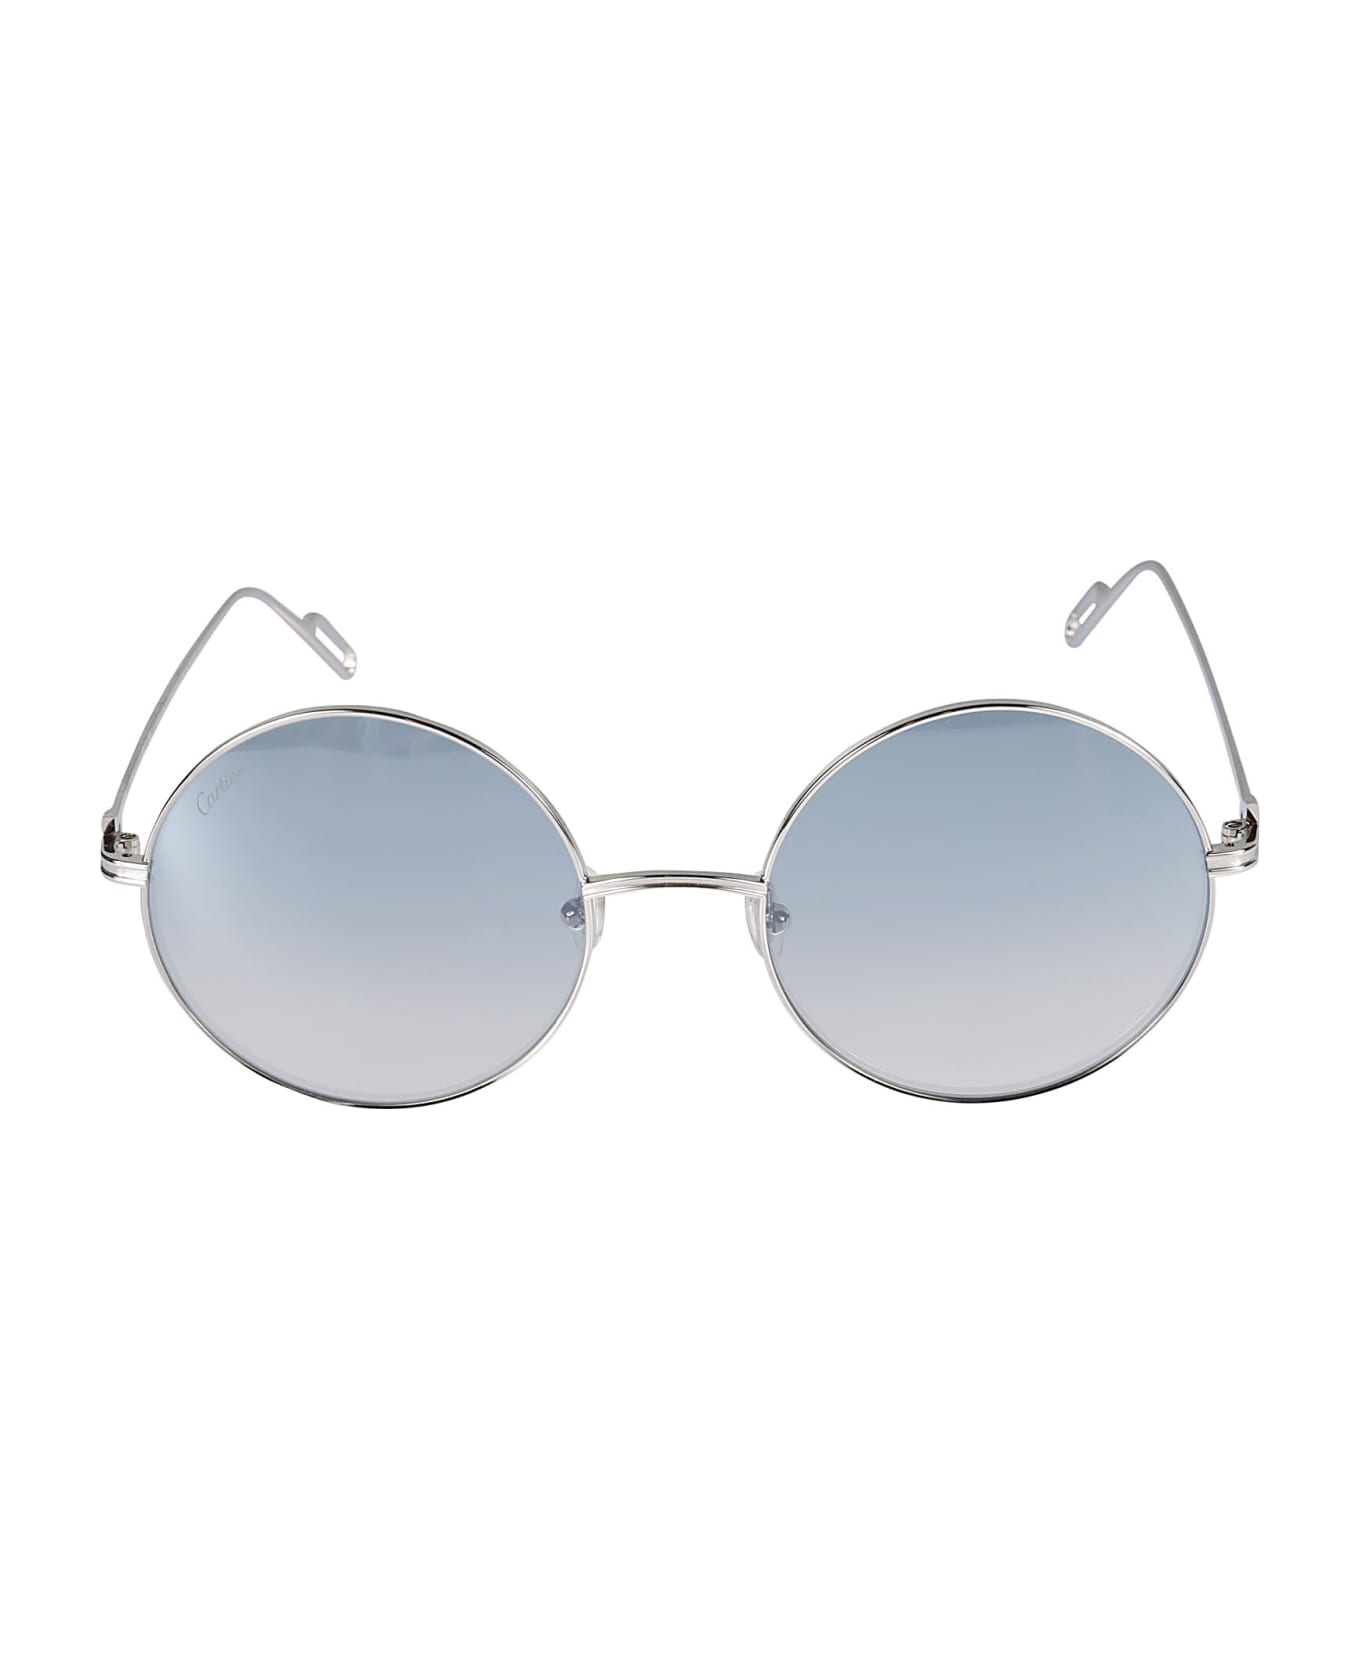 Cartier Eyewear Premiere De Cartier Sunglasses - 006 silver silver blue サングラス